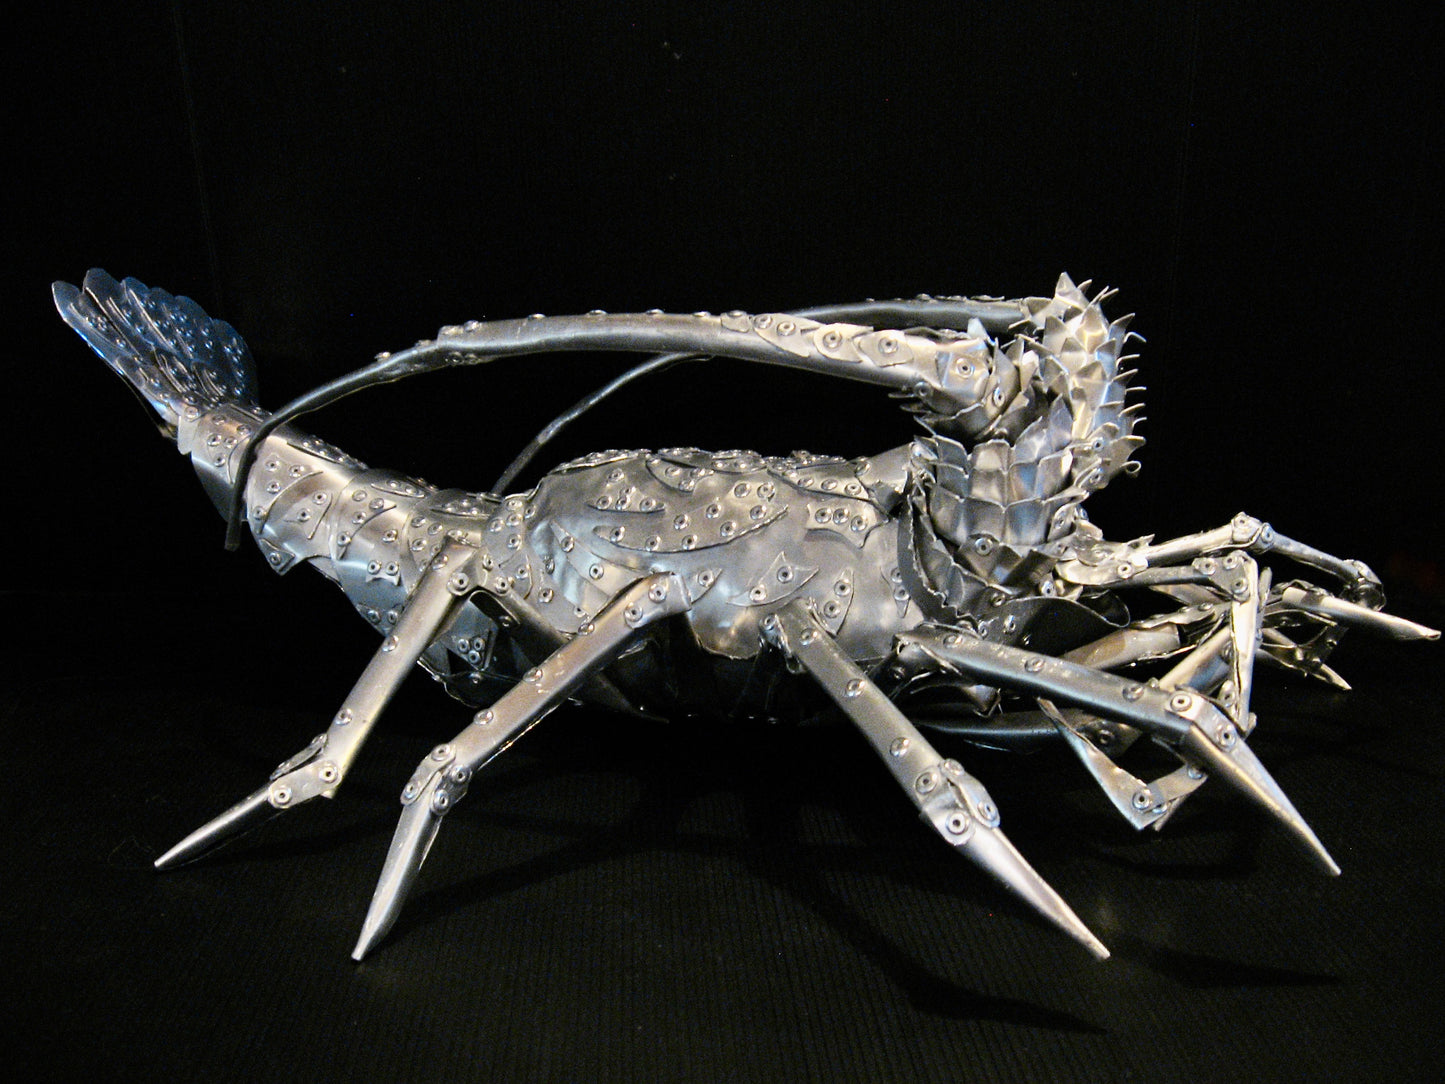 Aluminium Koura (crayfish) Sculpure by Harley Moore Silver Fern Gallery